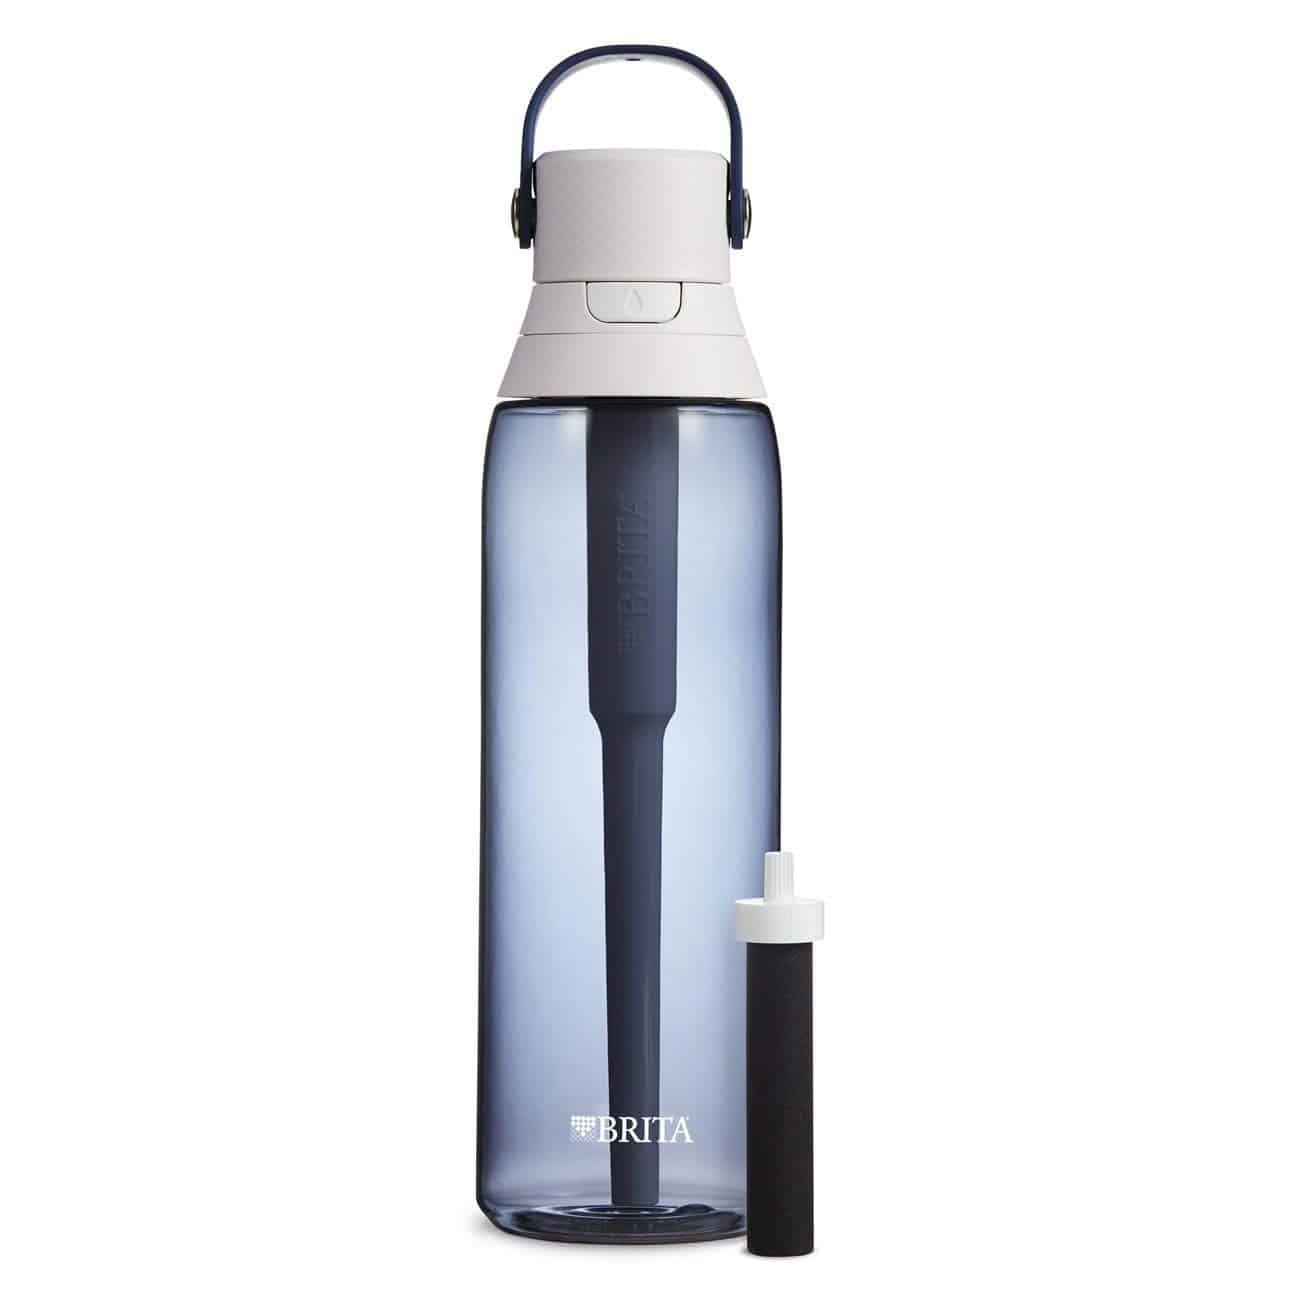 Brita Premium Water Bottle: Clean, and Convenient